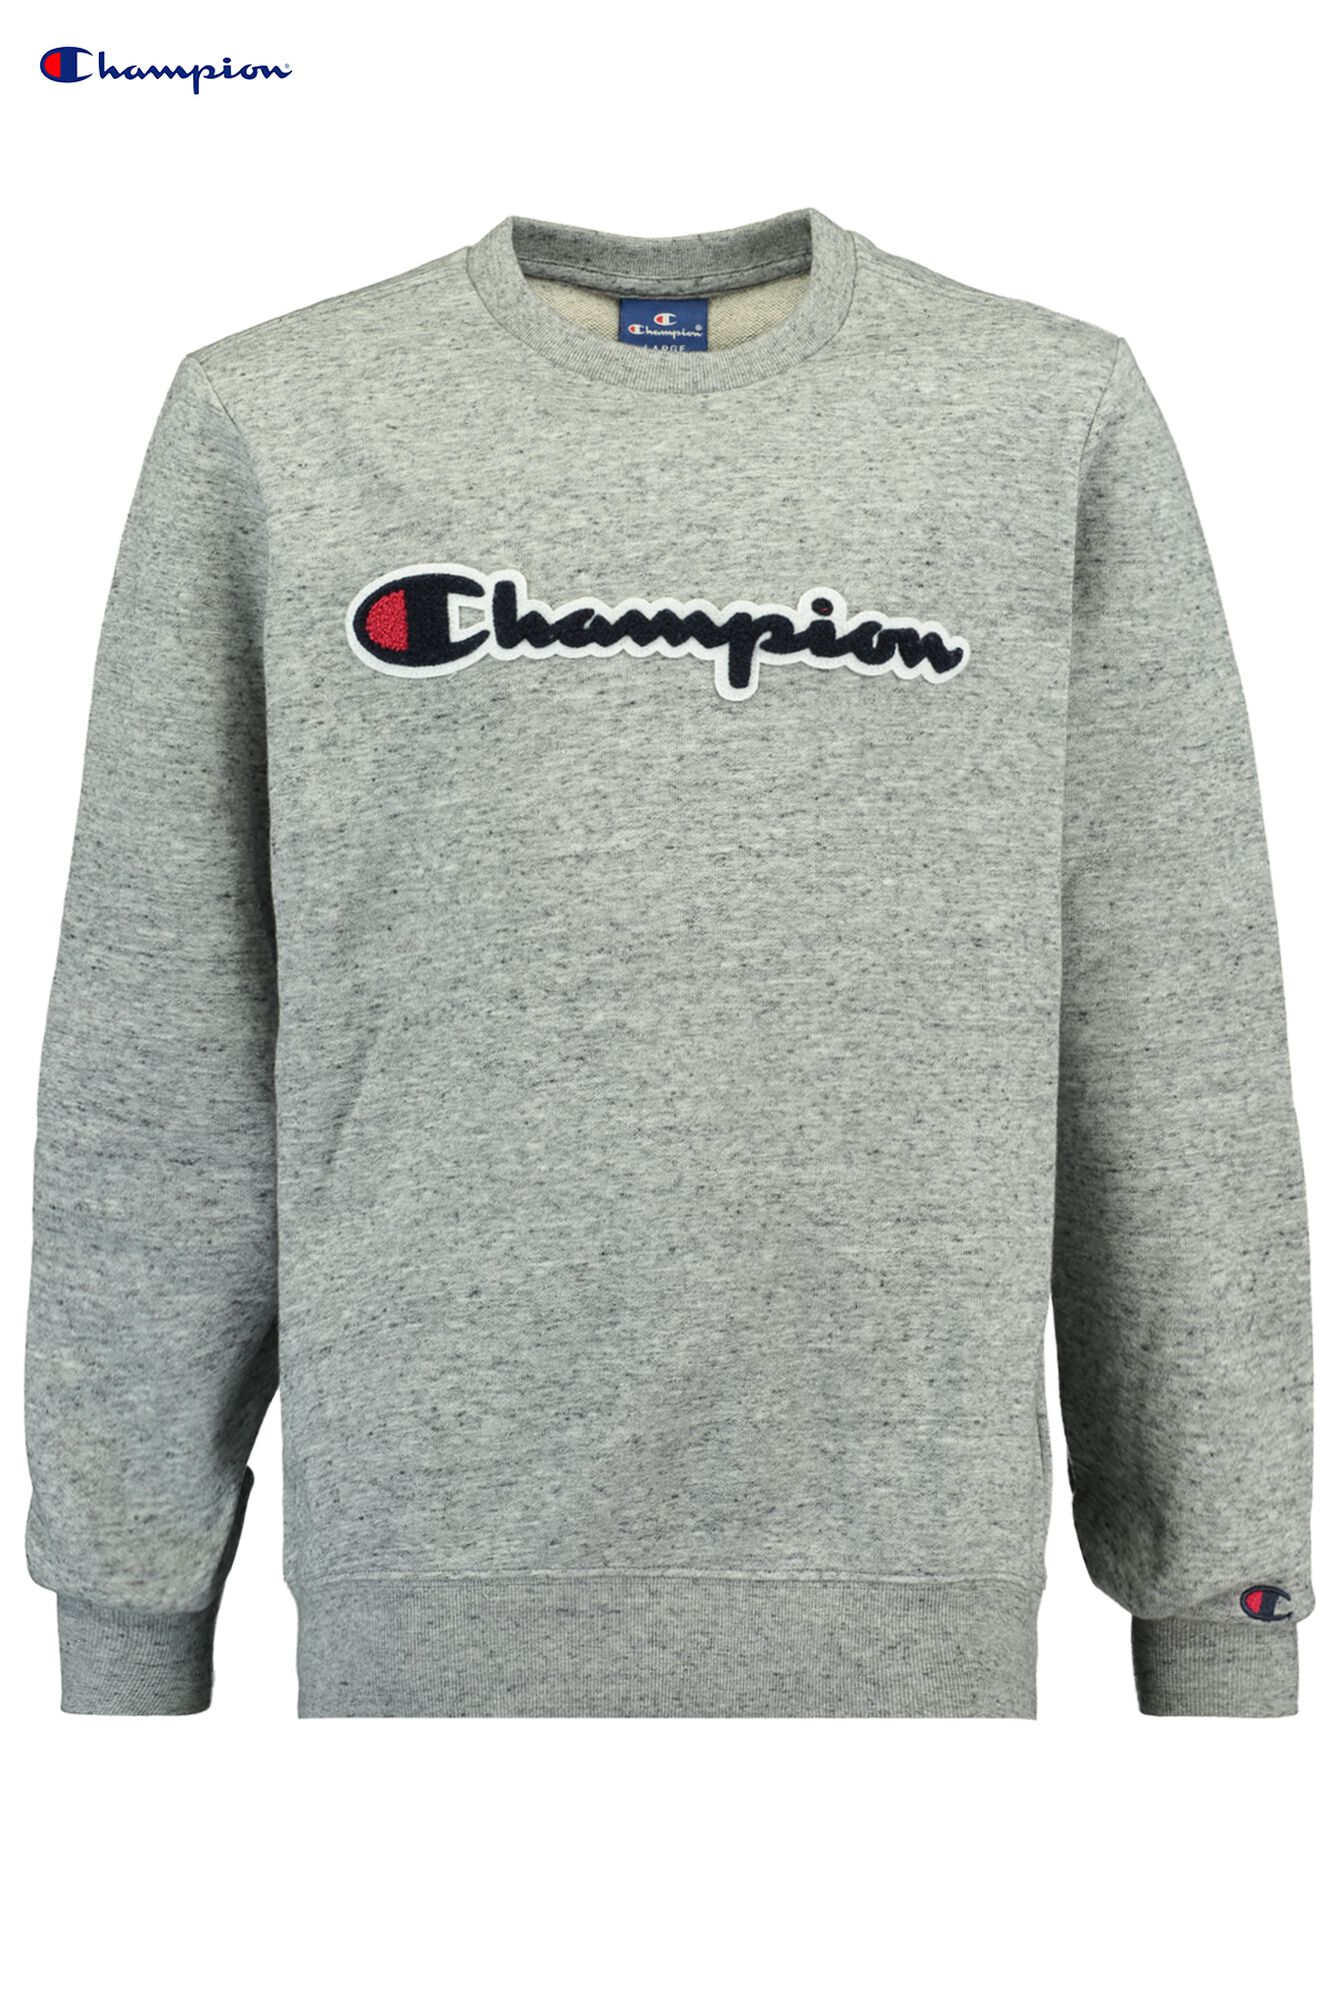 Boys Sweater Champion logo Grey Buy Online